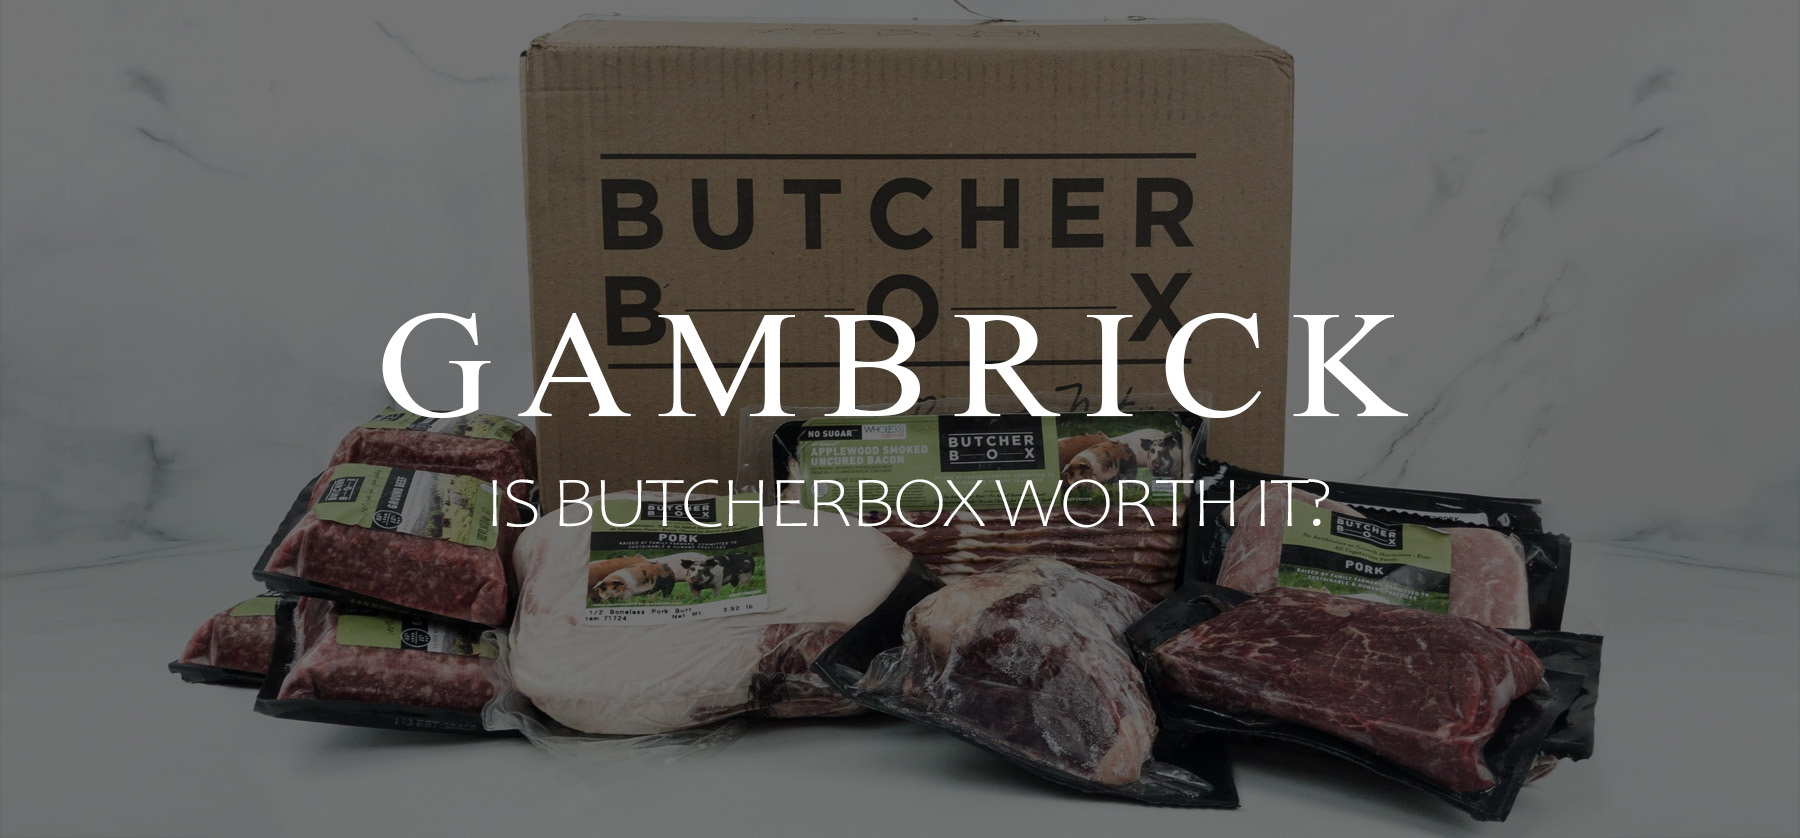 is butcherbox worth it? banner